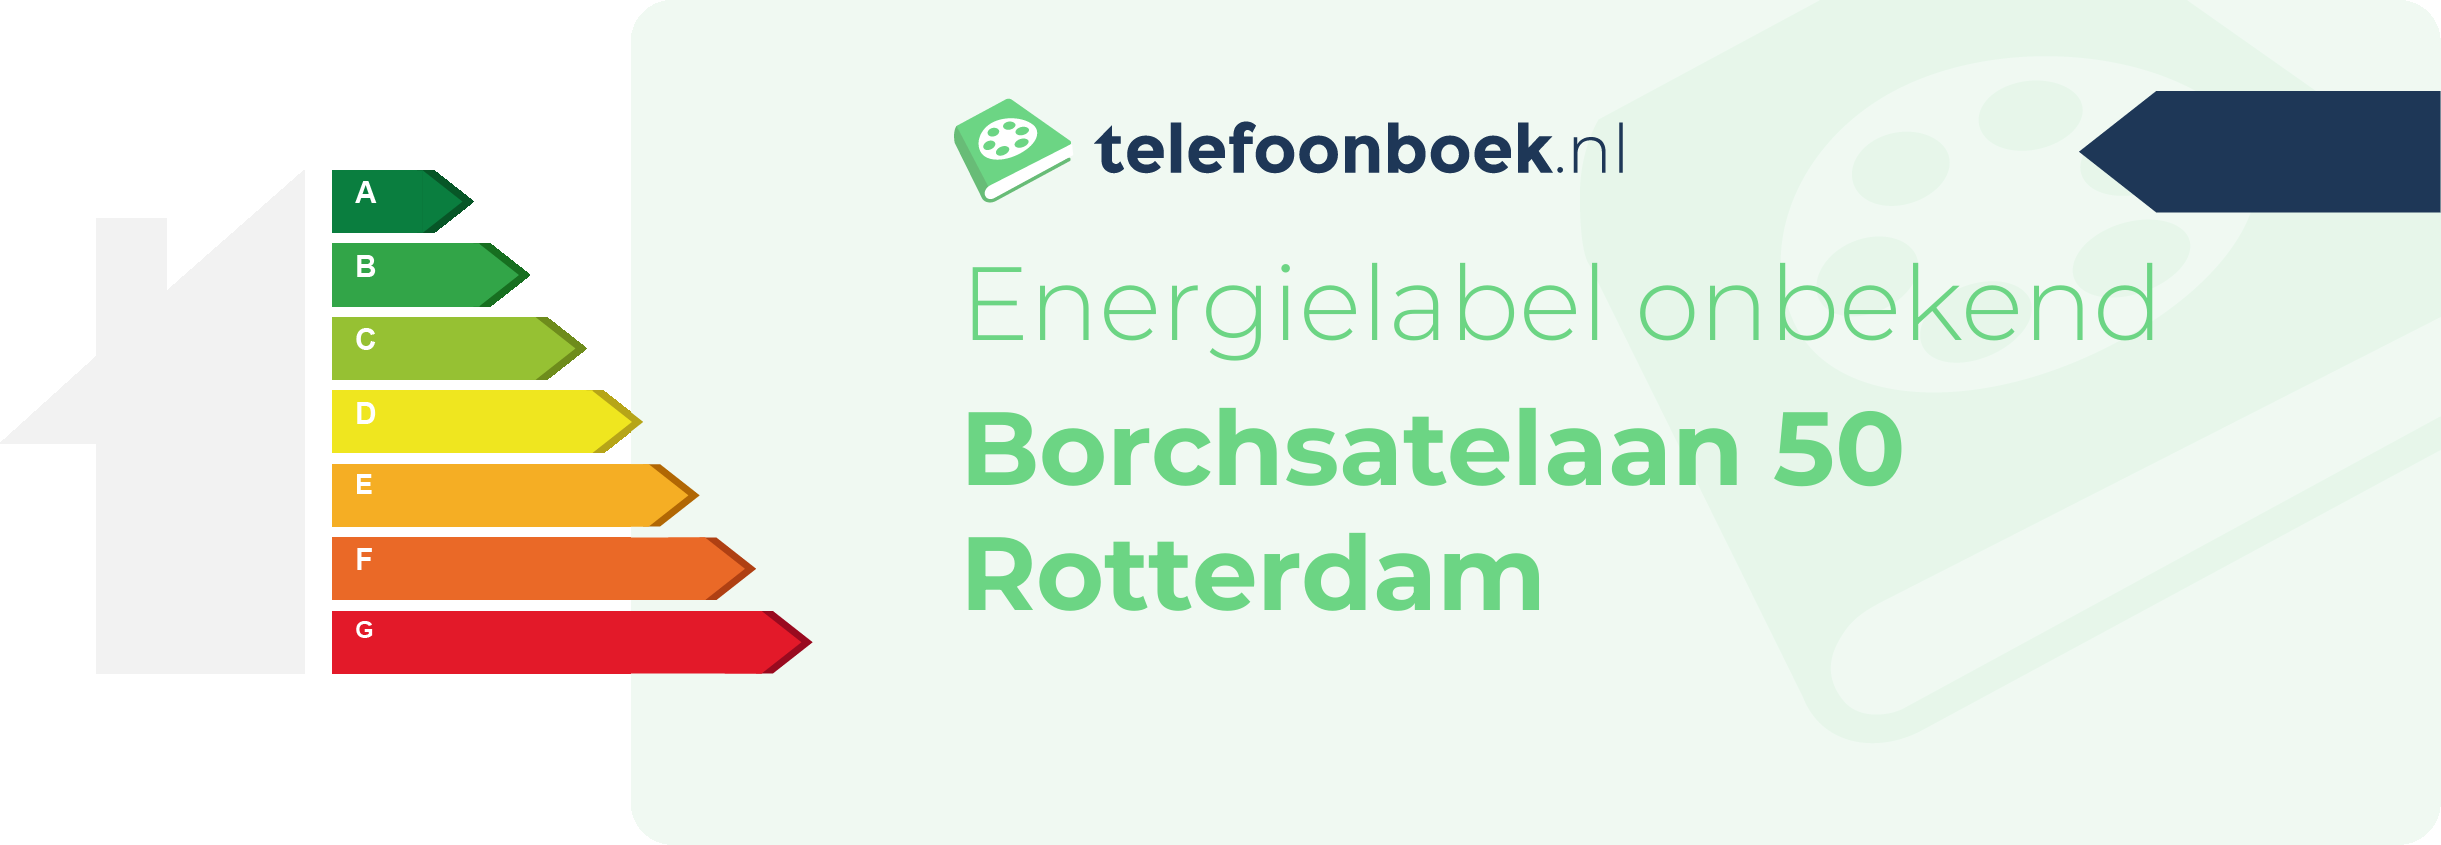 Energielabel Borchsatelaan 50 Rotterdam